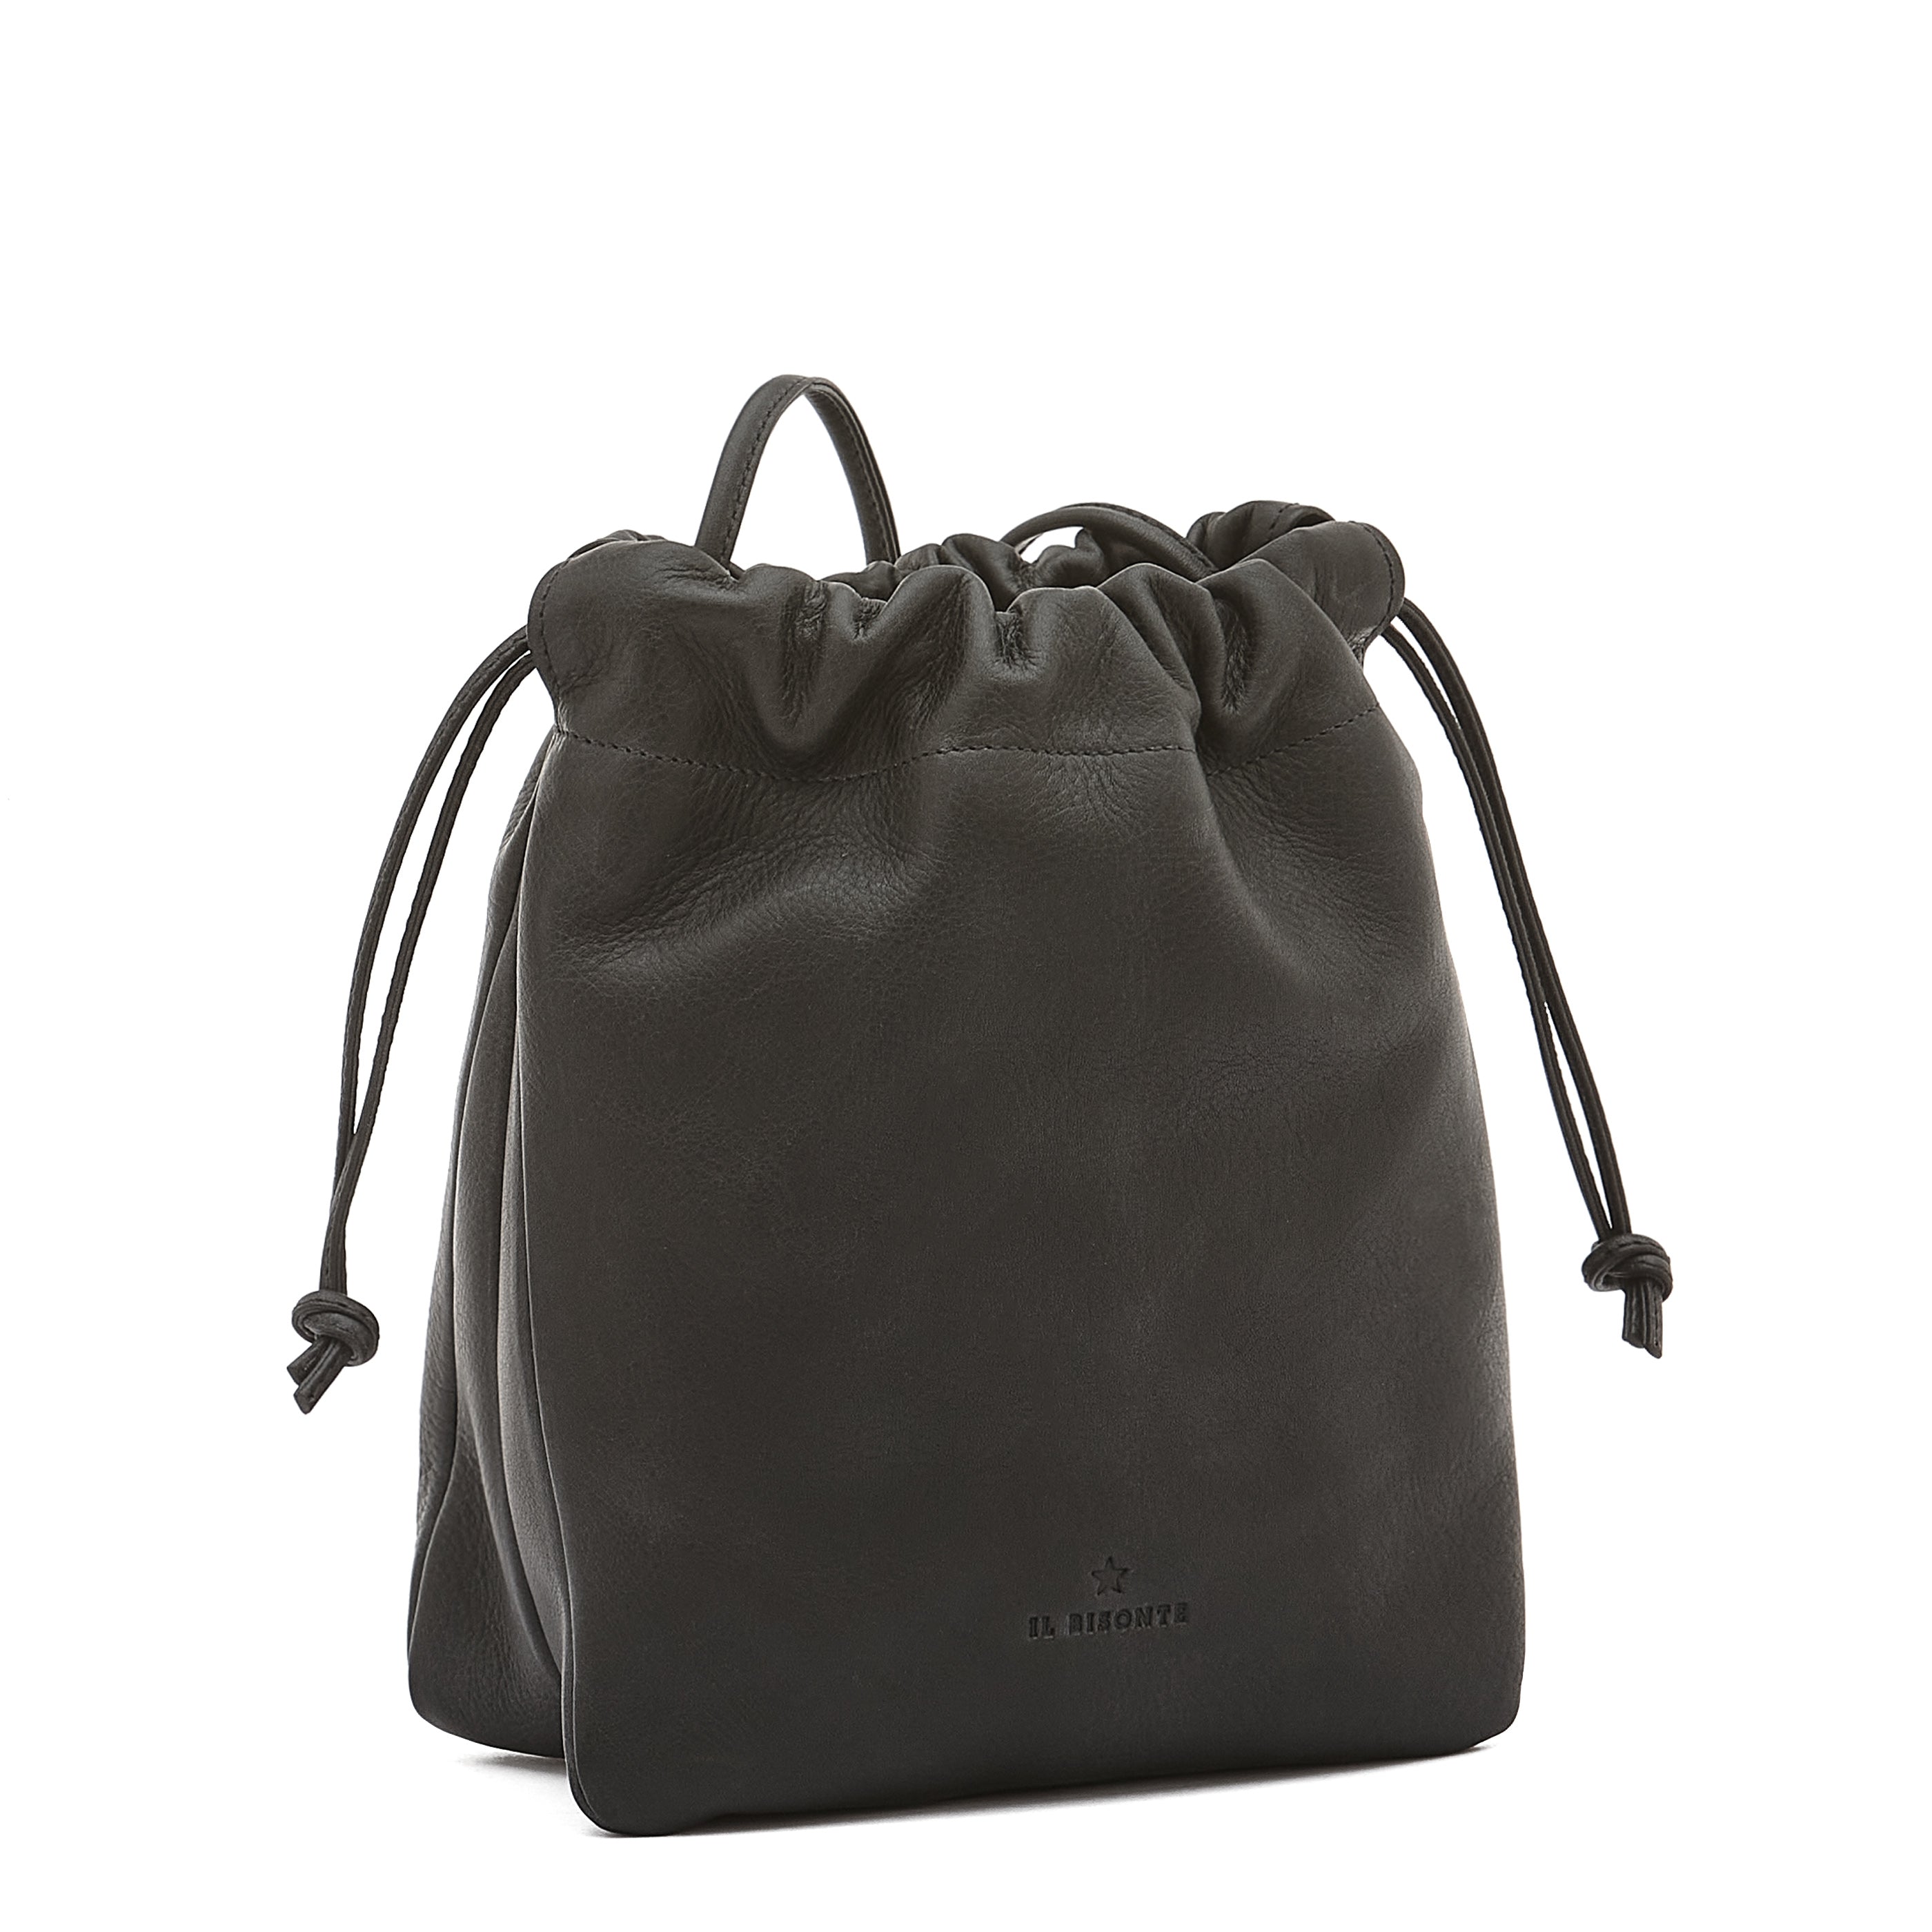 Bellini | Women's bucket bag in leather color black